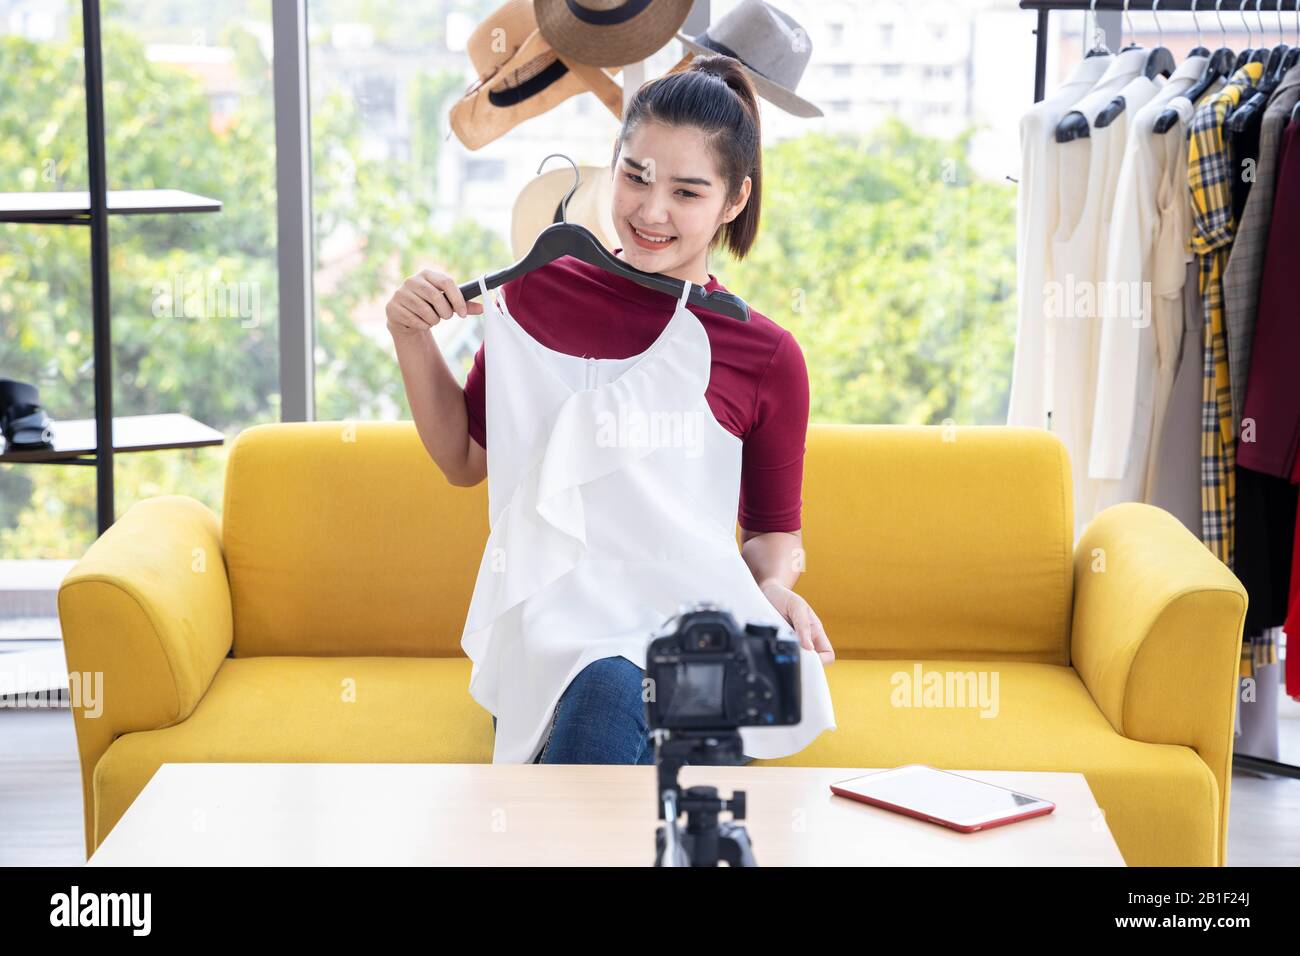 Heureux Asian Internet influenceur examiner ou vendre des robes blanches par streaming en ligne. Banque D'Images